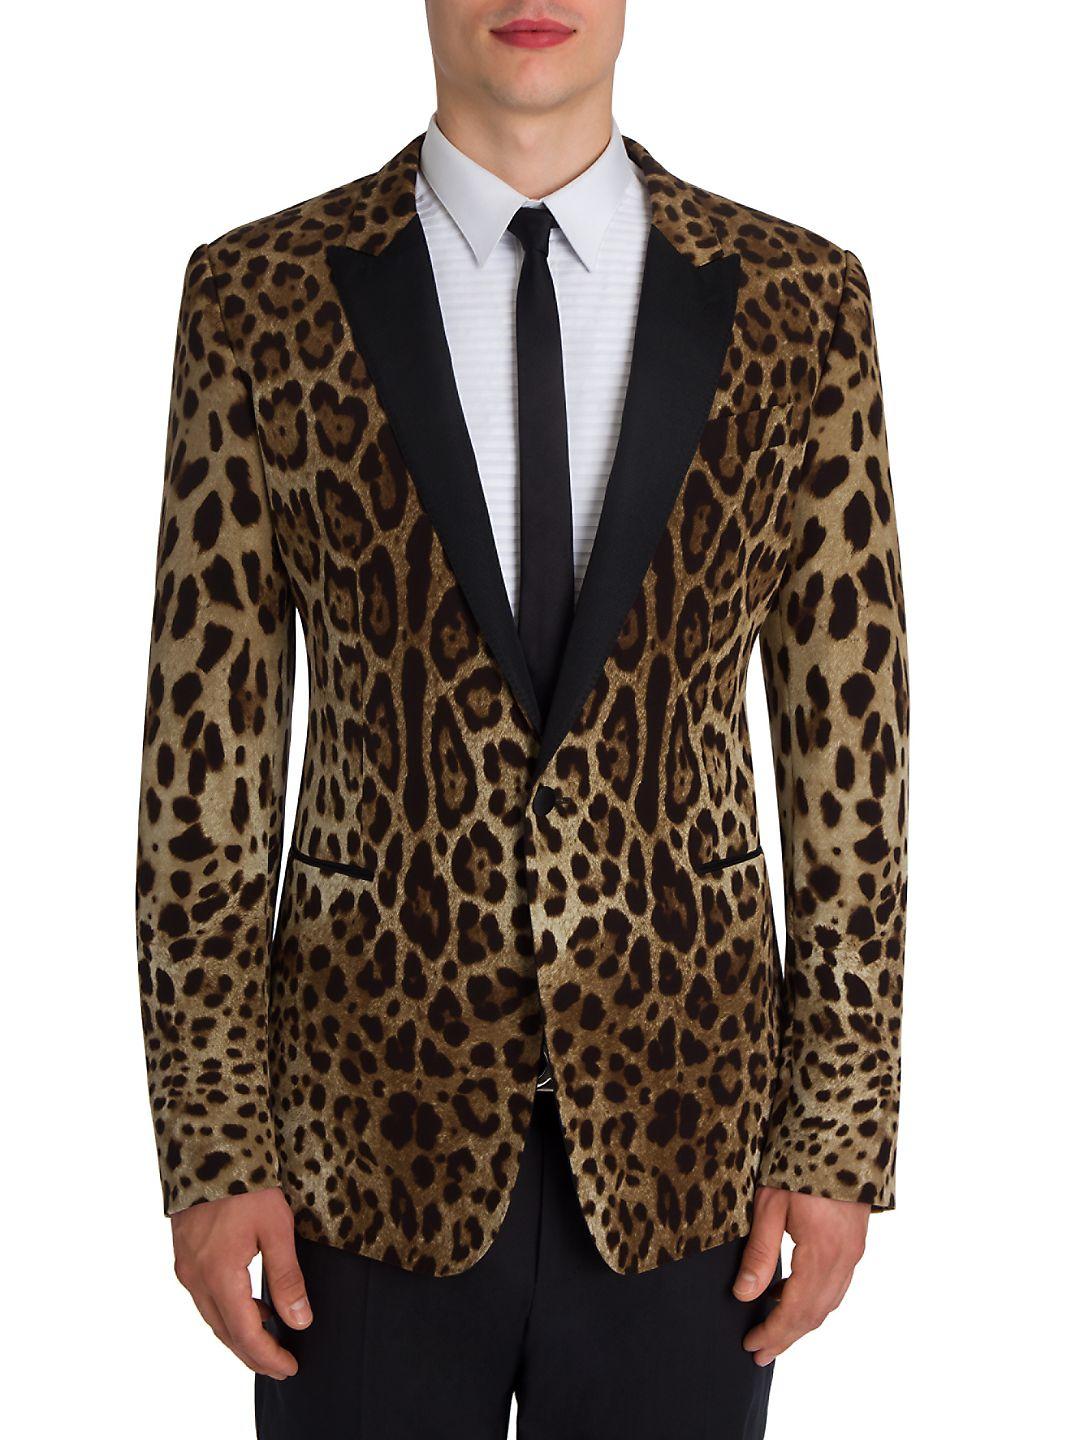 Dolce & Gabbana Silk Leopard Print Martini Jacket in Brown for Men - Lyst